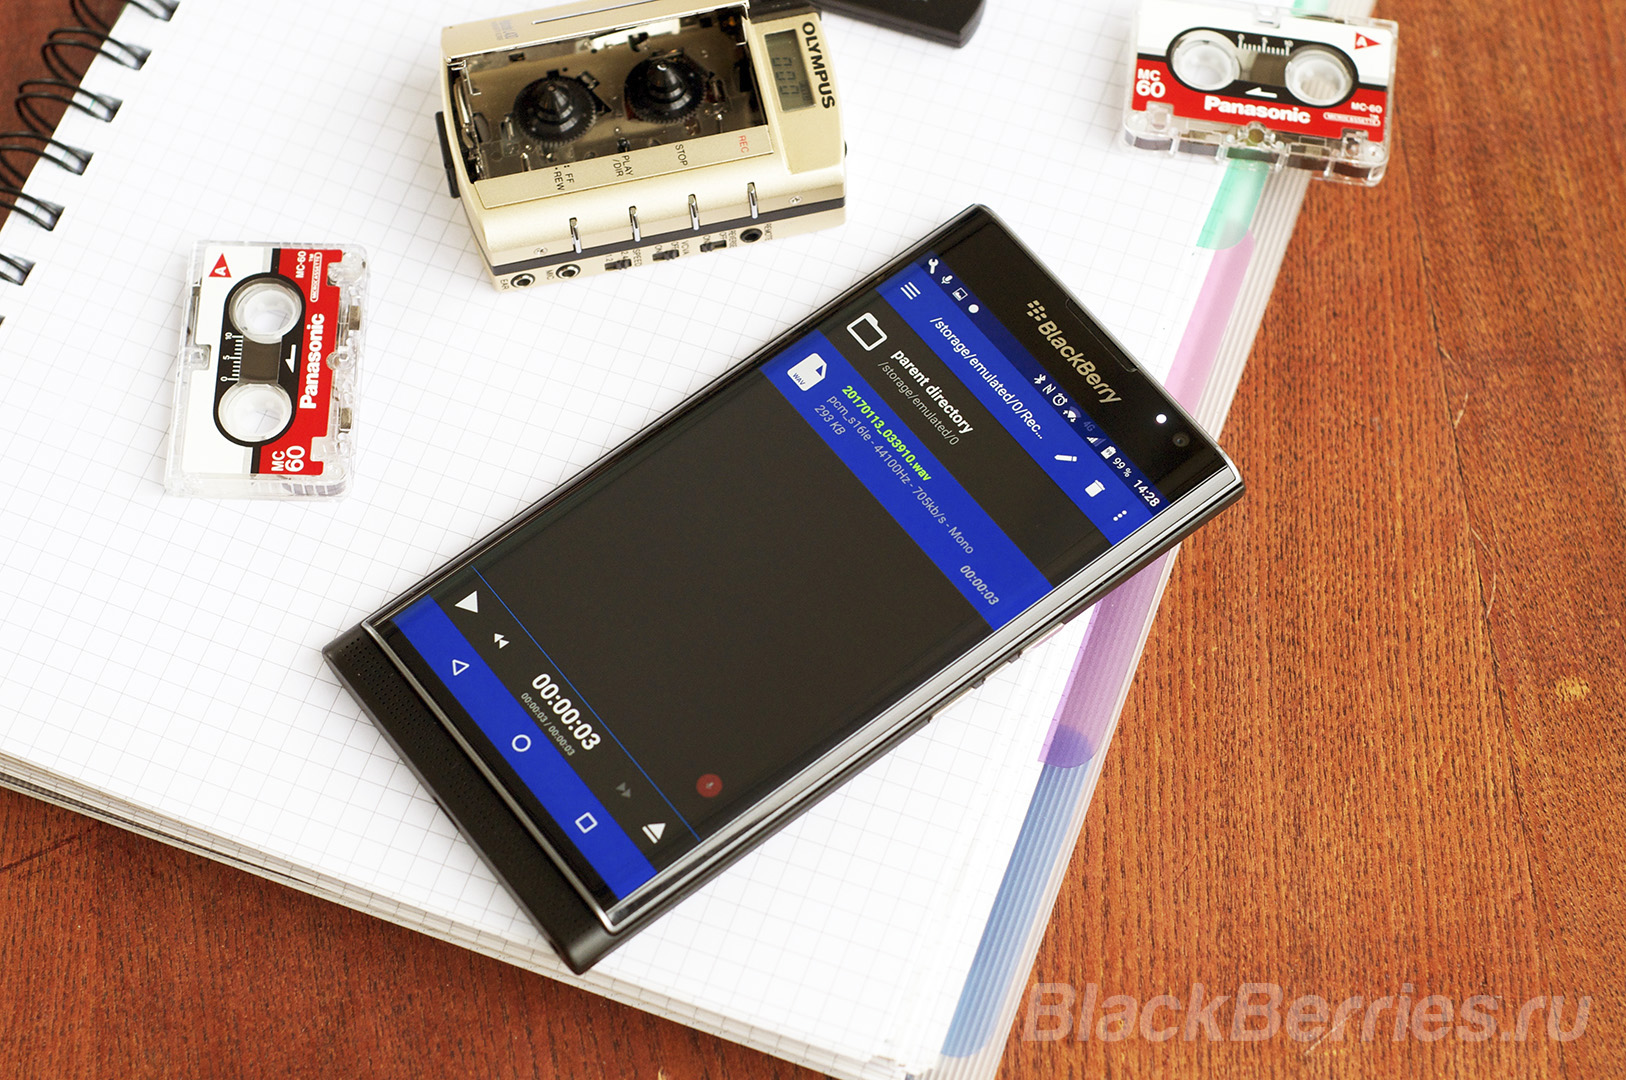 BlackBerry-Android-Recorder-17.jpg